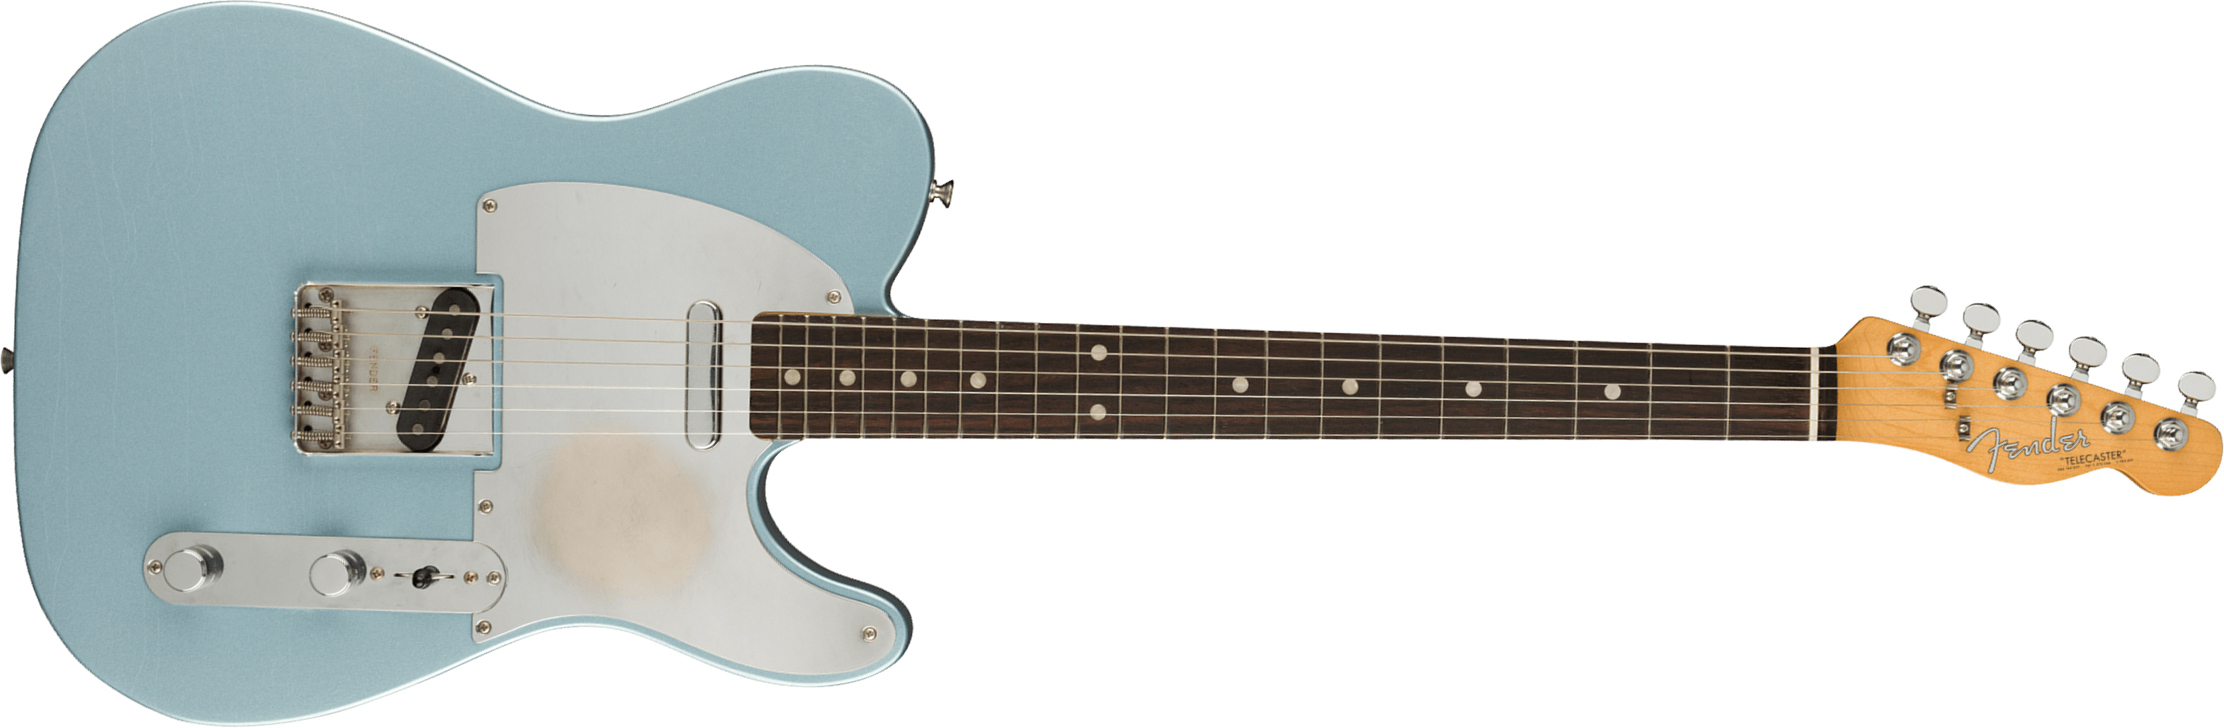 Fender Chrissie Hynde Tele Signature Mex Rw - Road Worn Faded Ice Blue Metallic - Tel shape electric guitar - Main picture